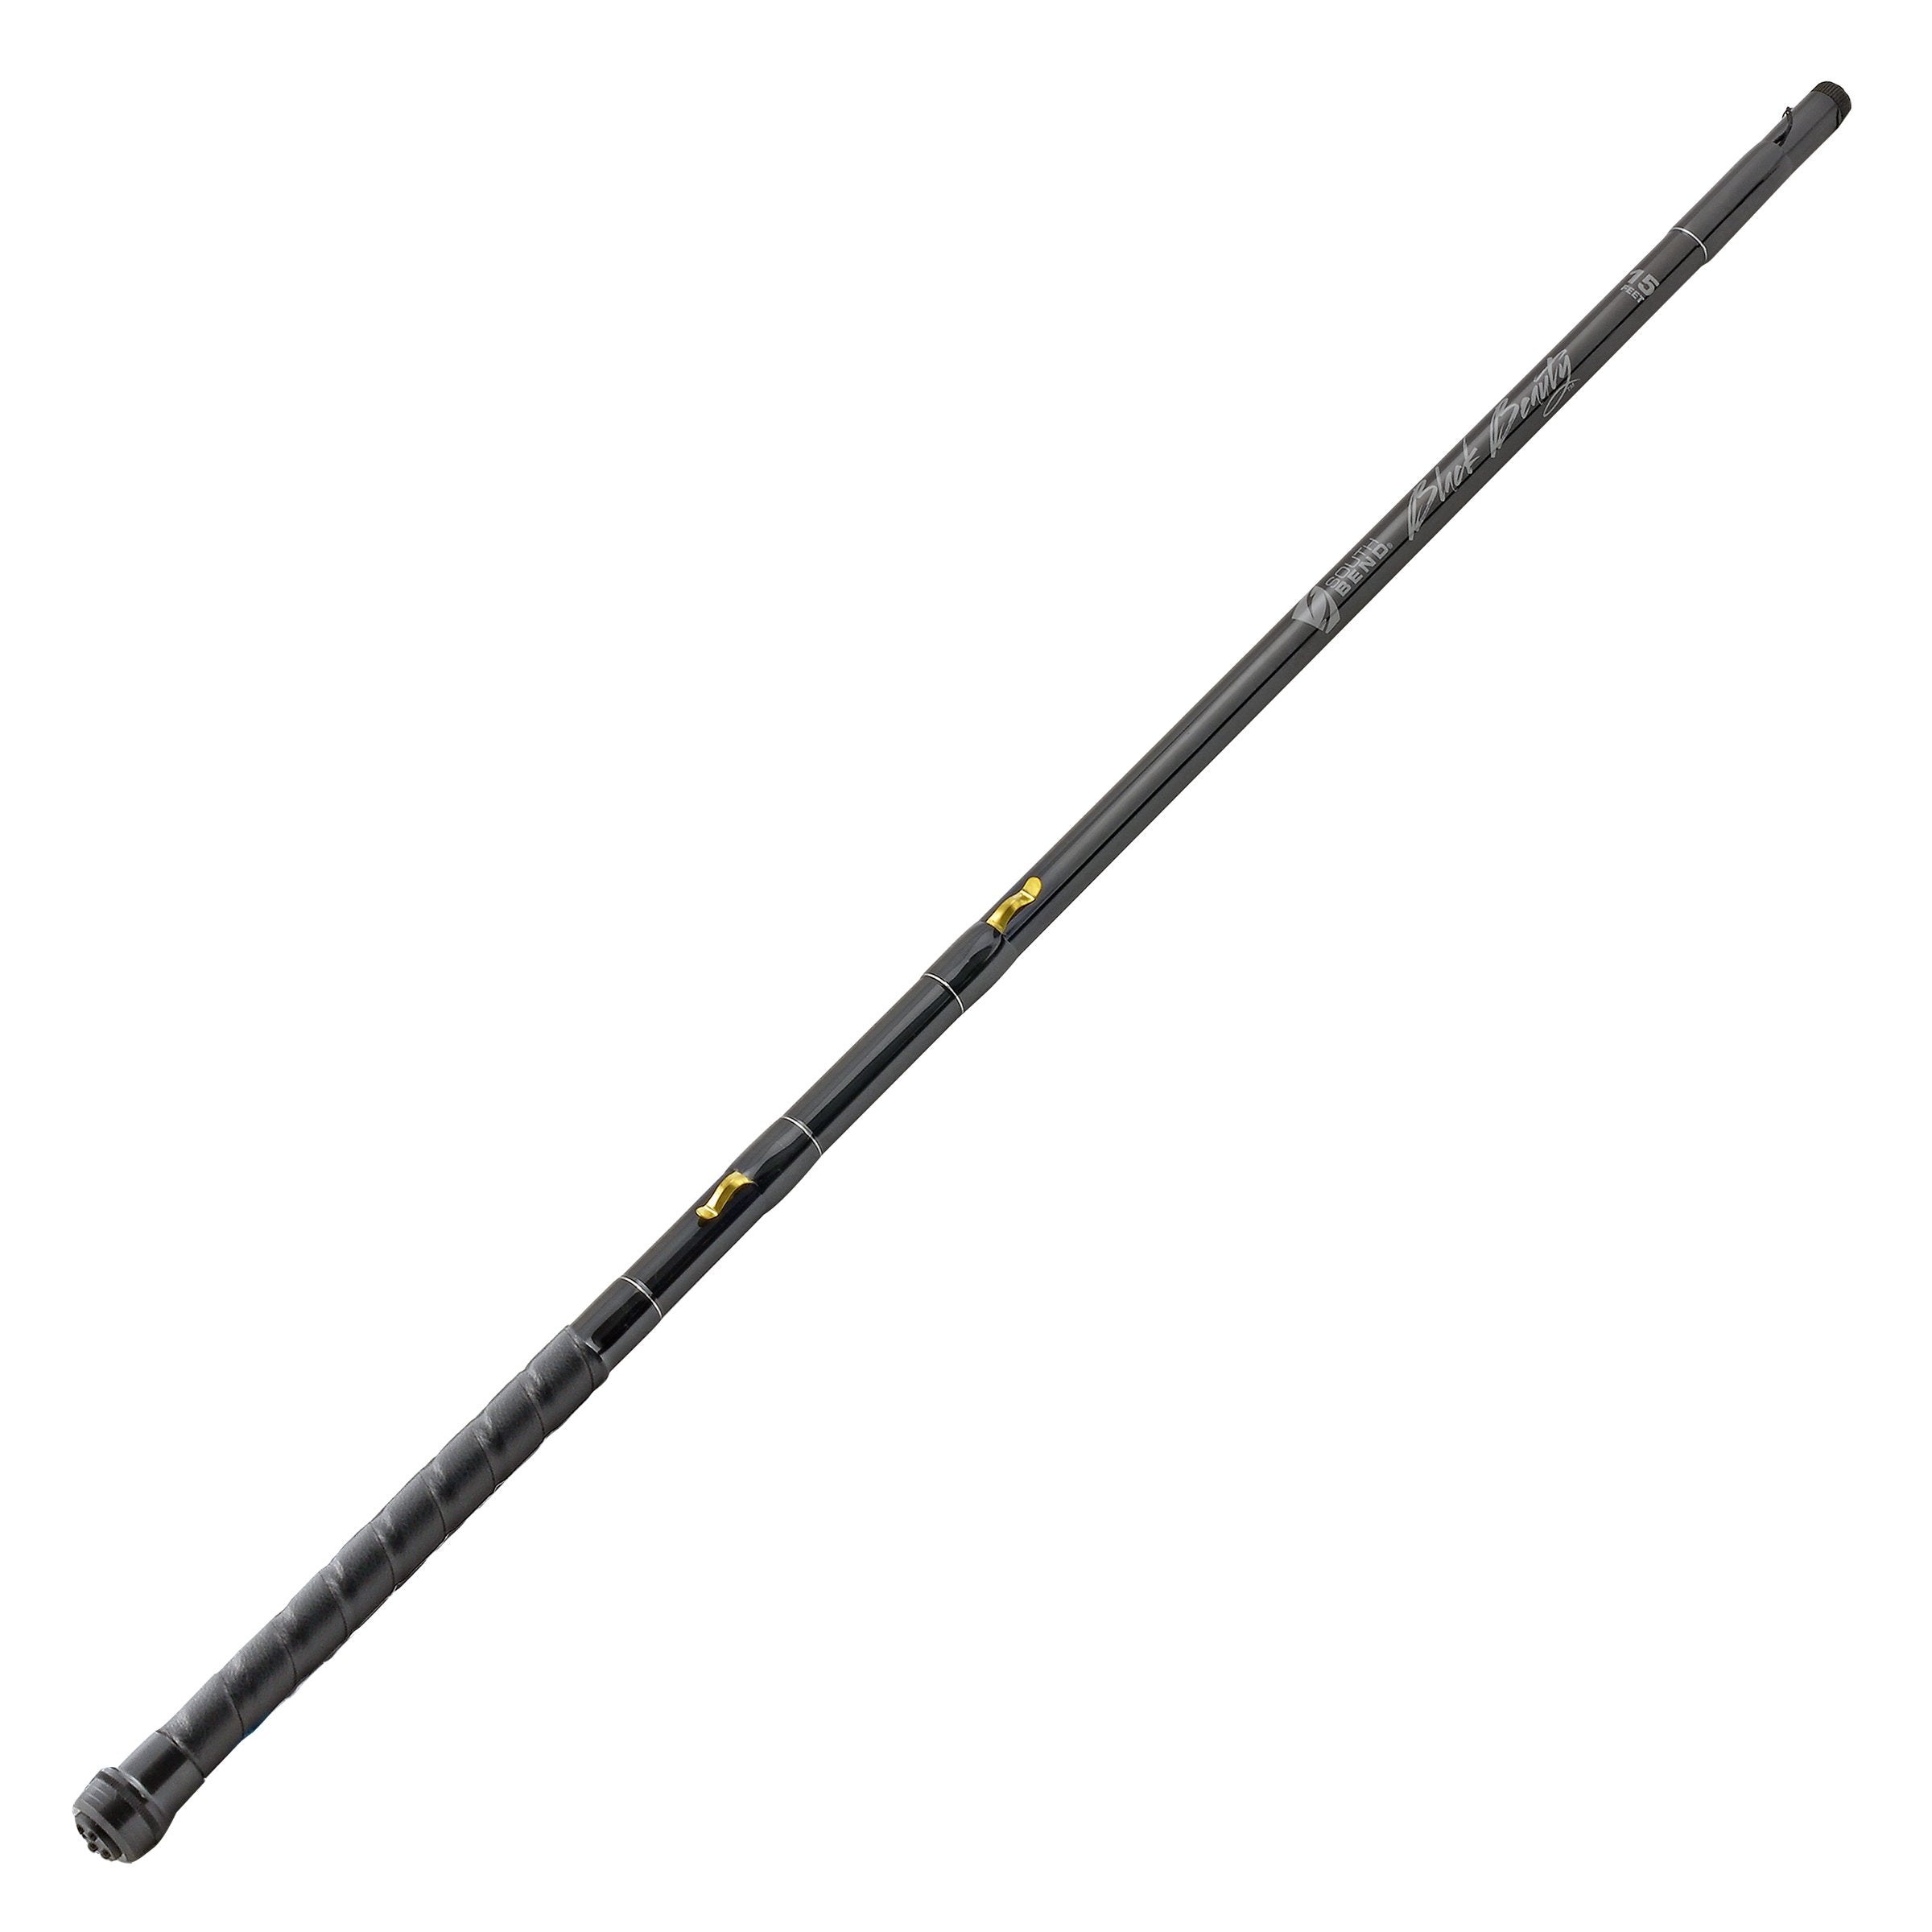 Crappie Stalker Bream Poles, Telescopic Fishing Rod - Import It All